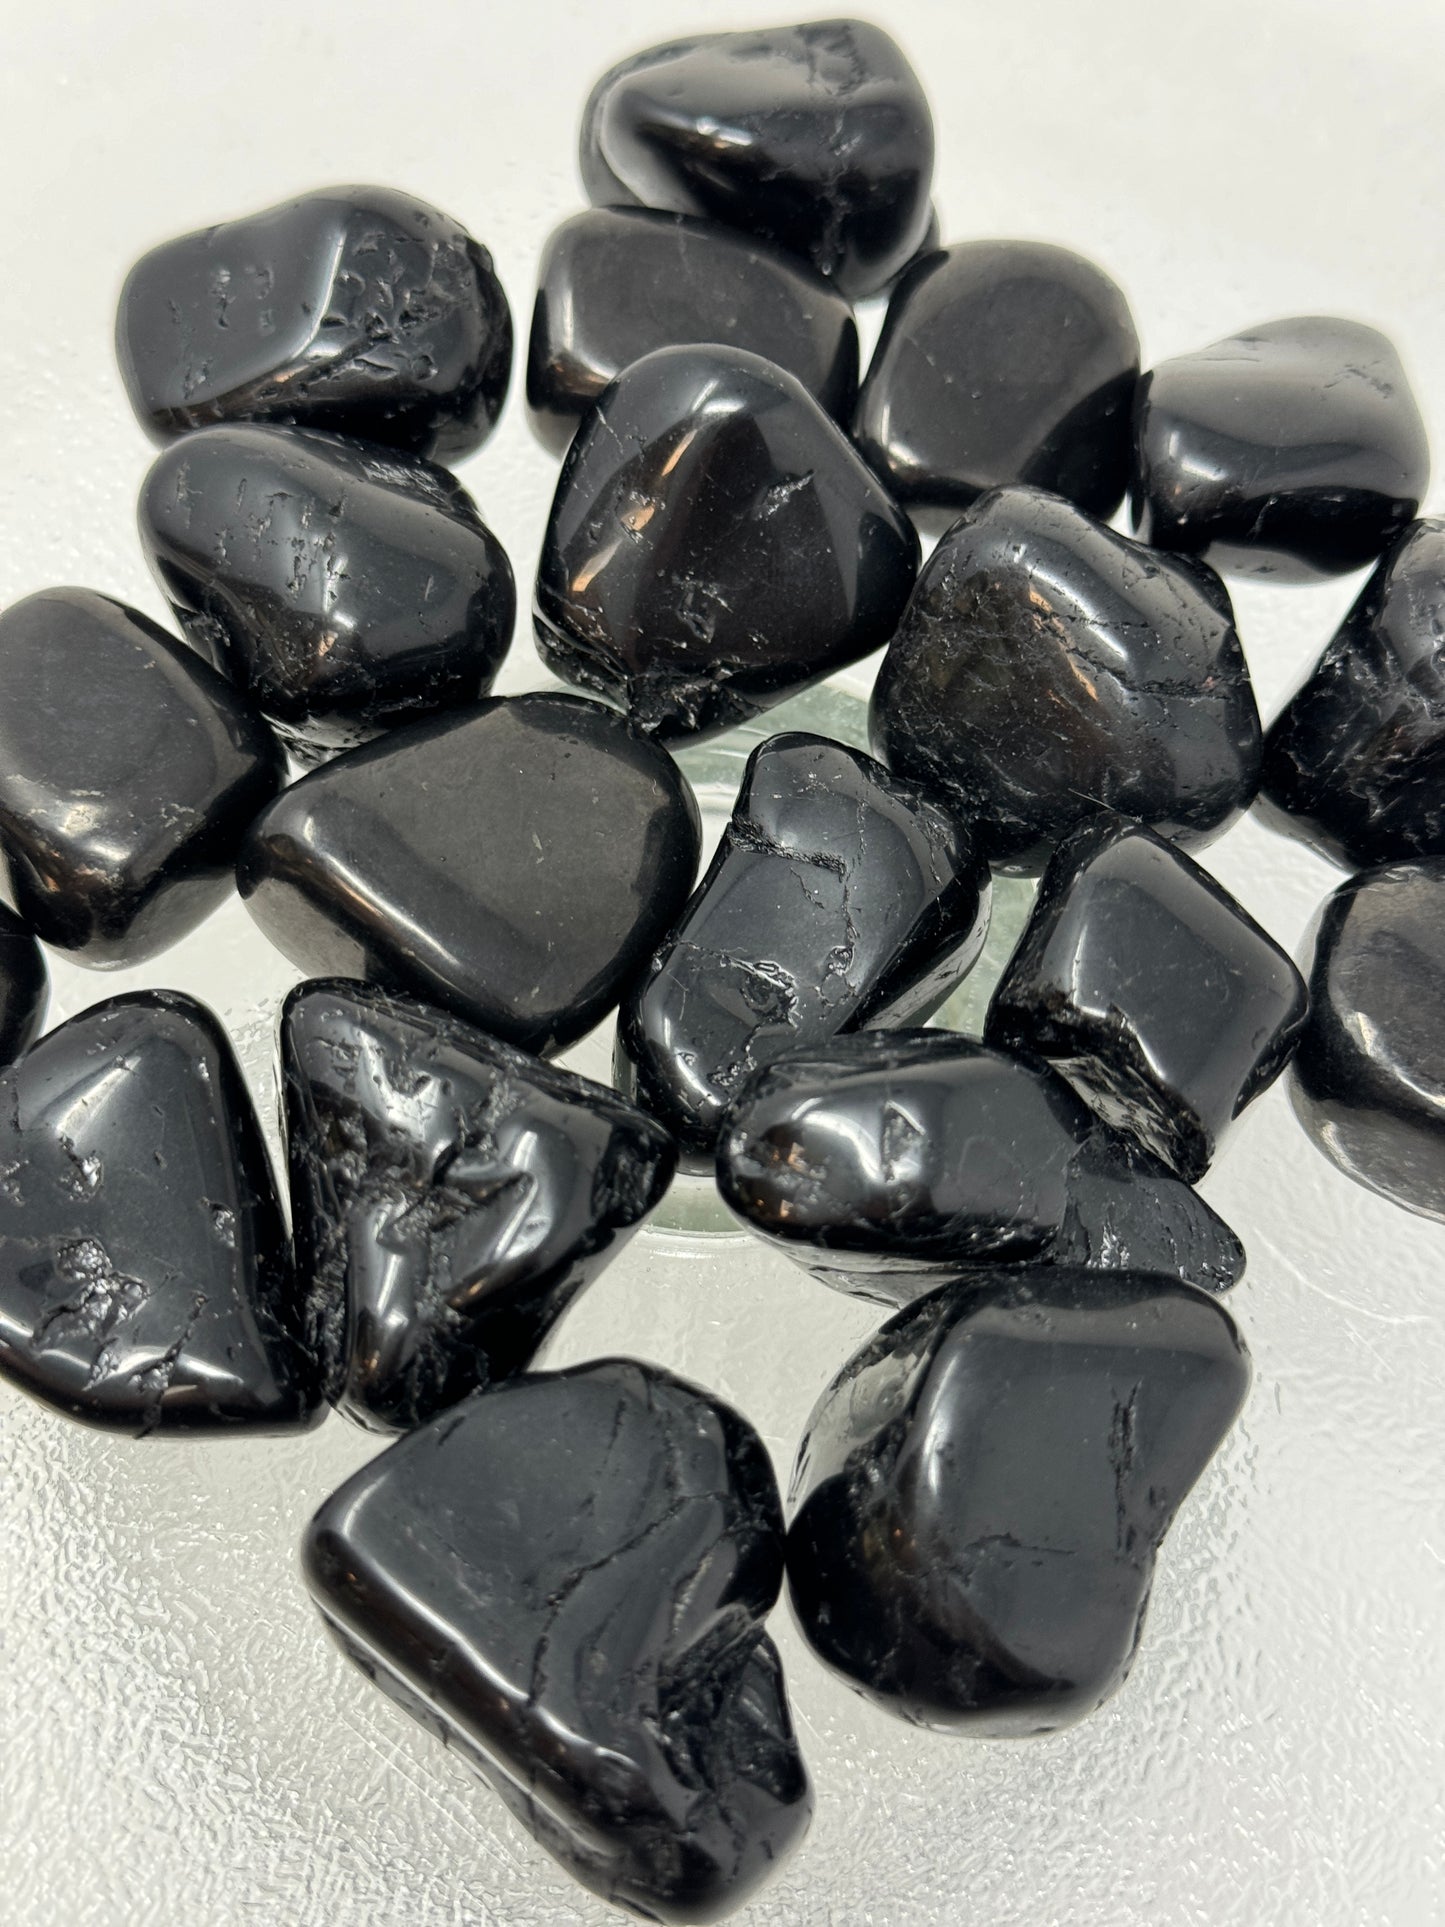 One Black Tourmaline Tumbled Stone